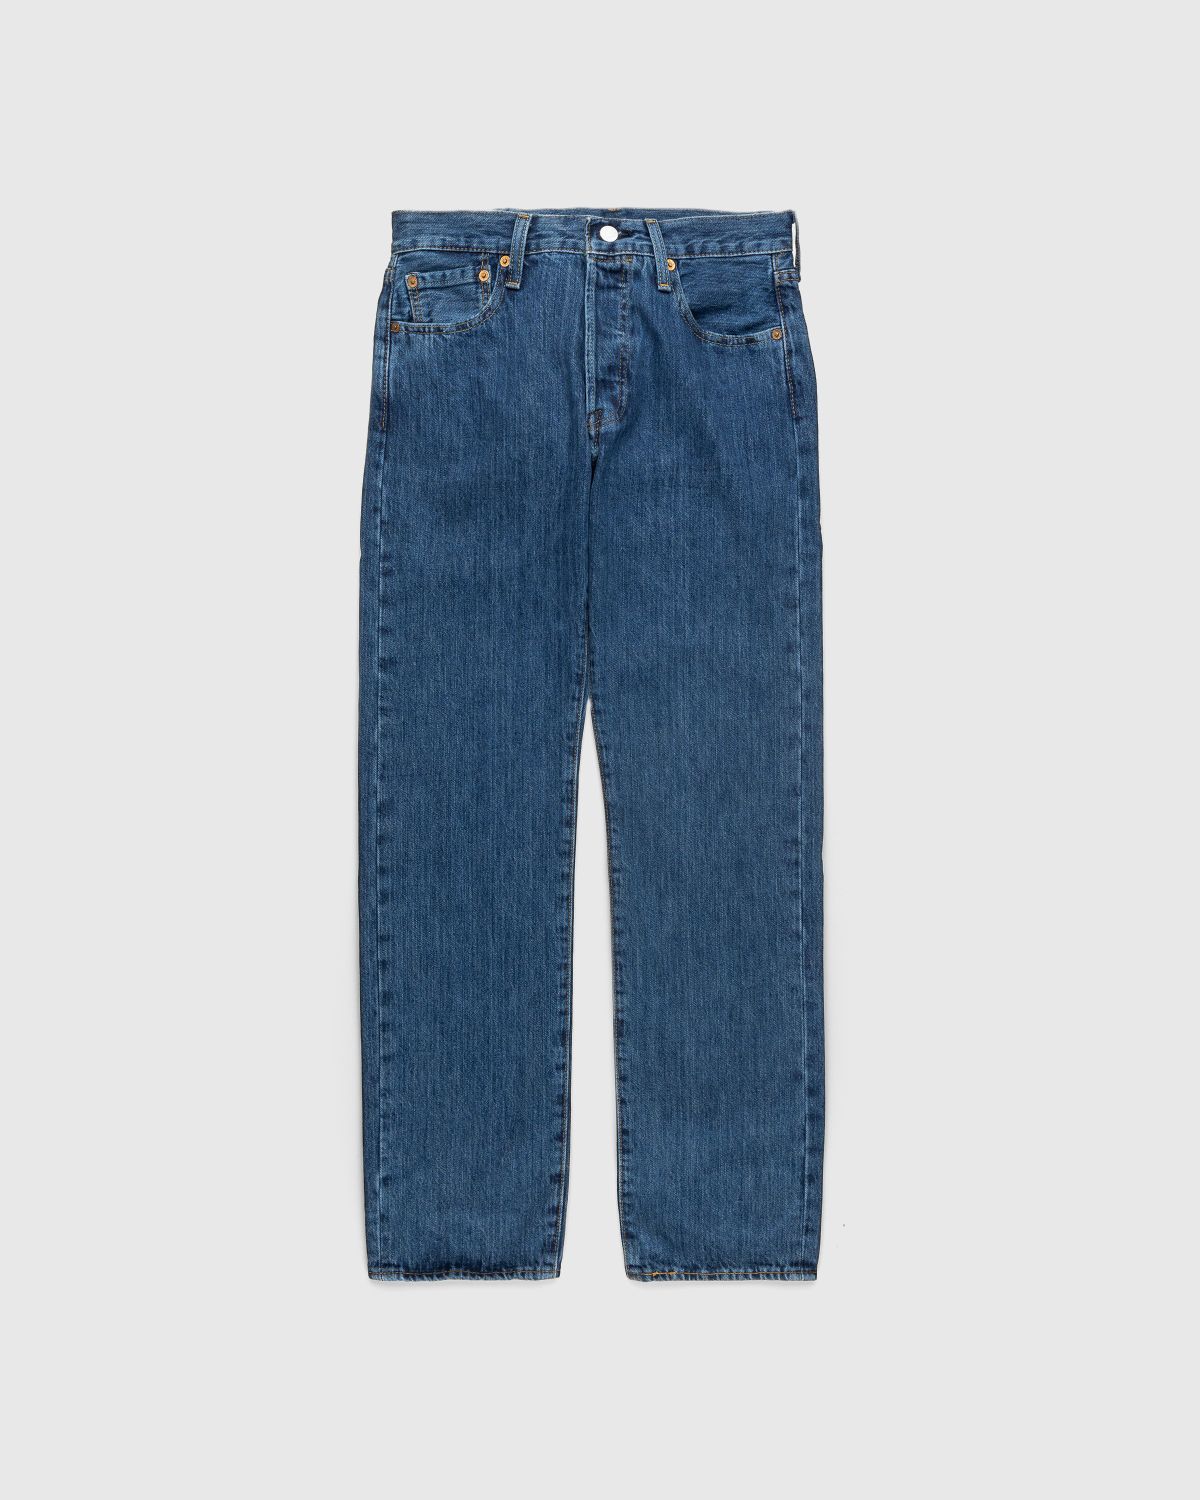 Levi's – 501 Original Fit Indigo Stonewash - Pants - Blue - Image 1